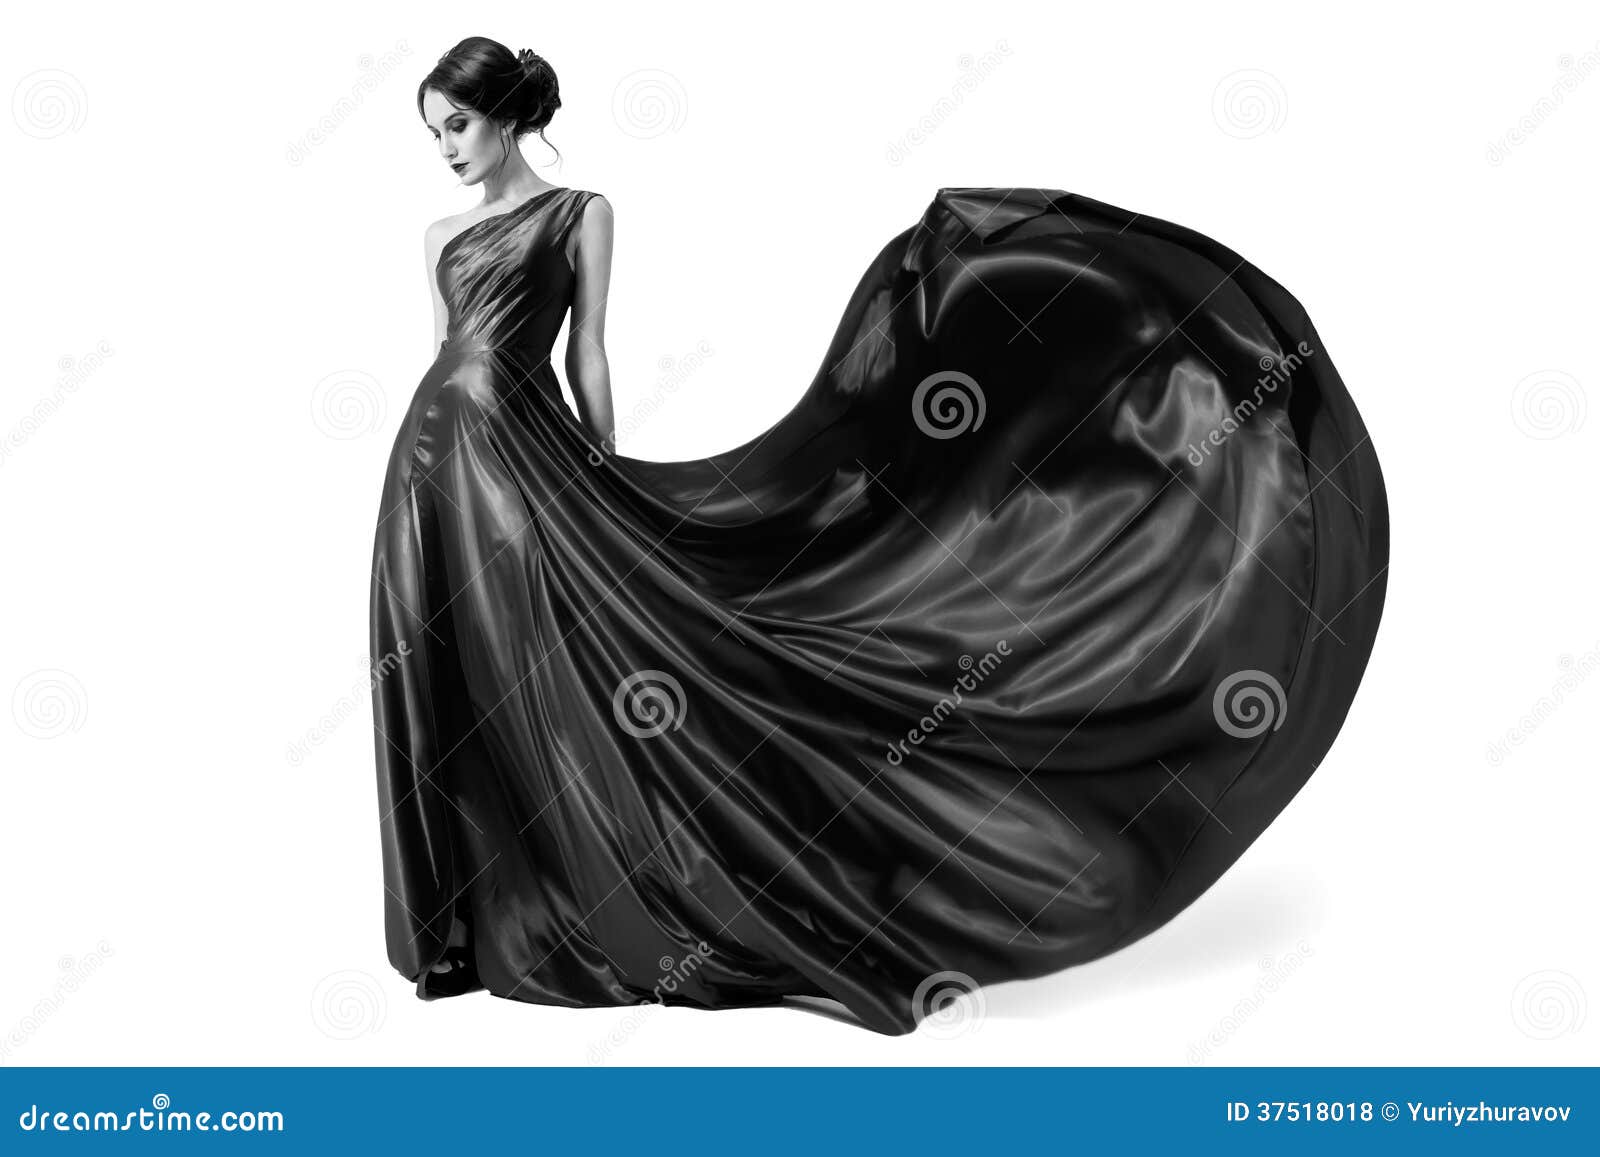 fashion woman in fluttering dress. bw image. 